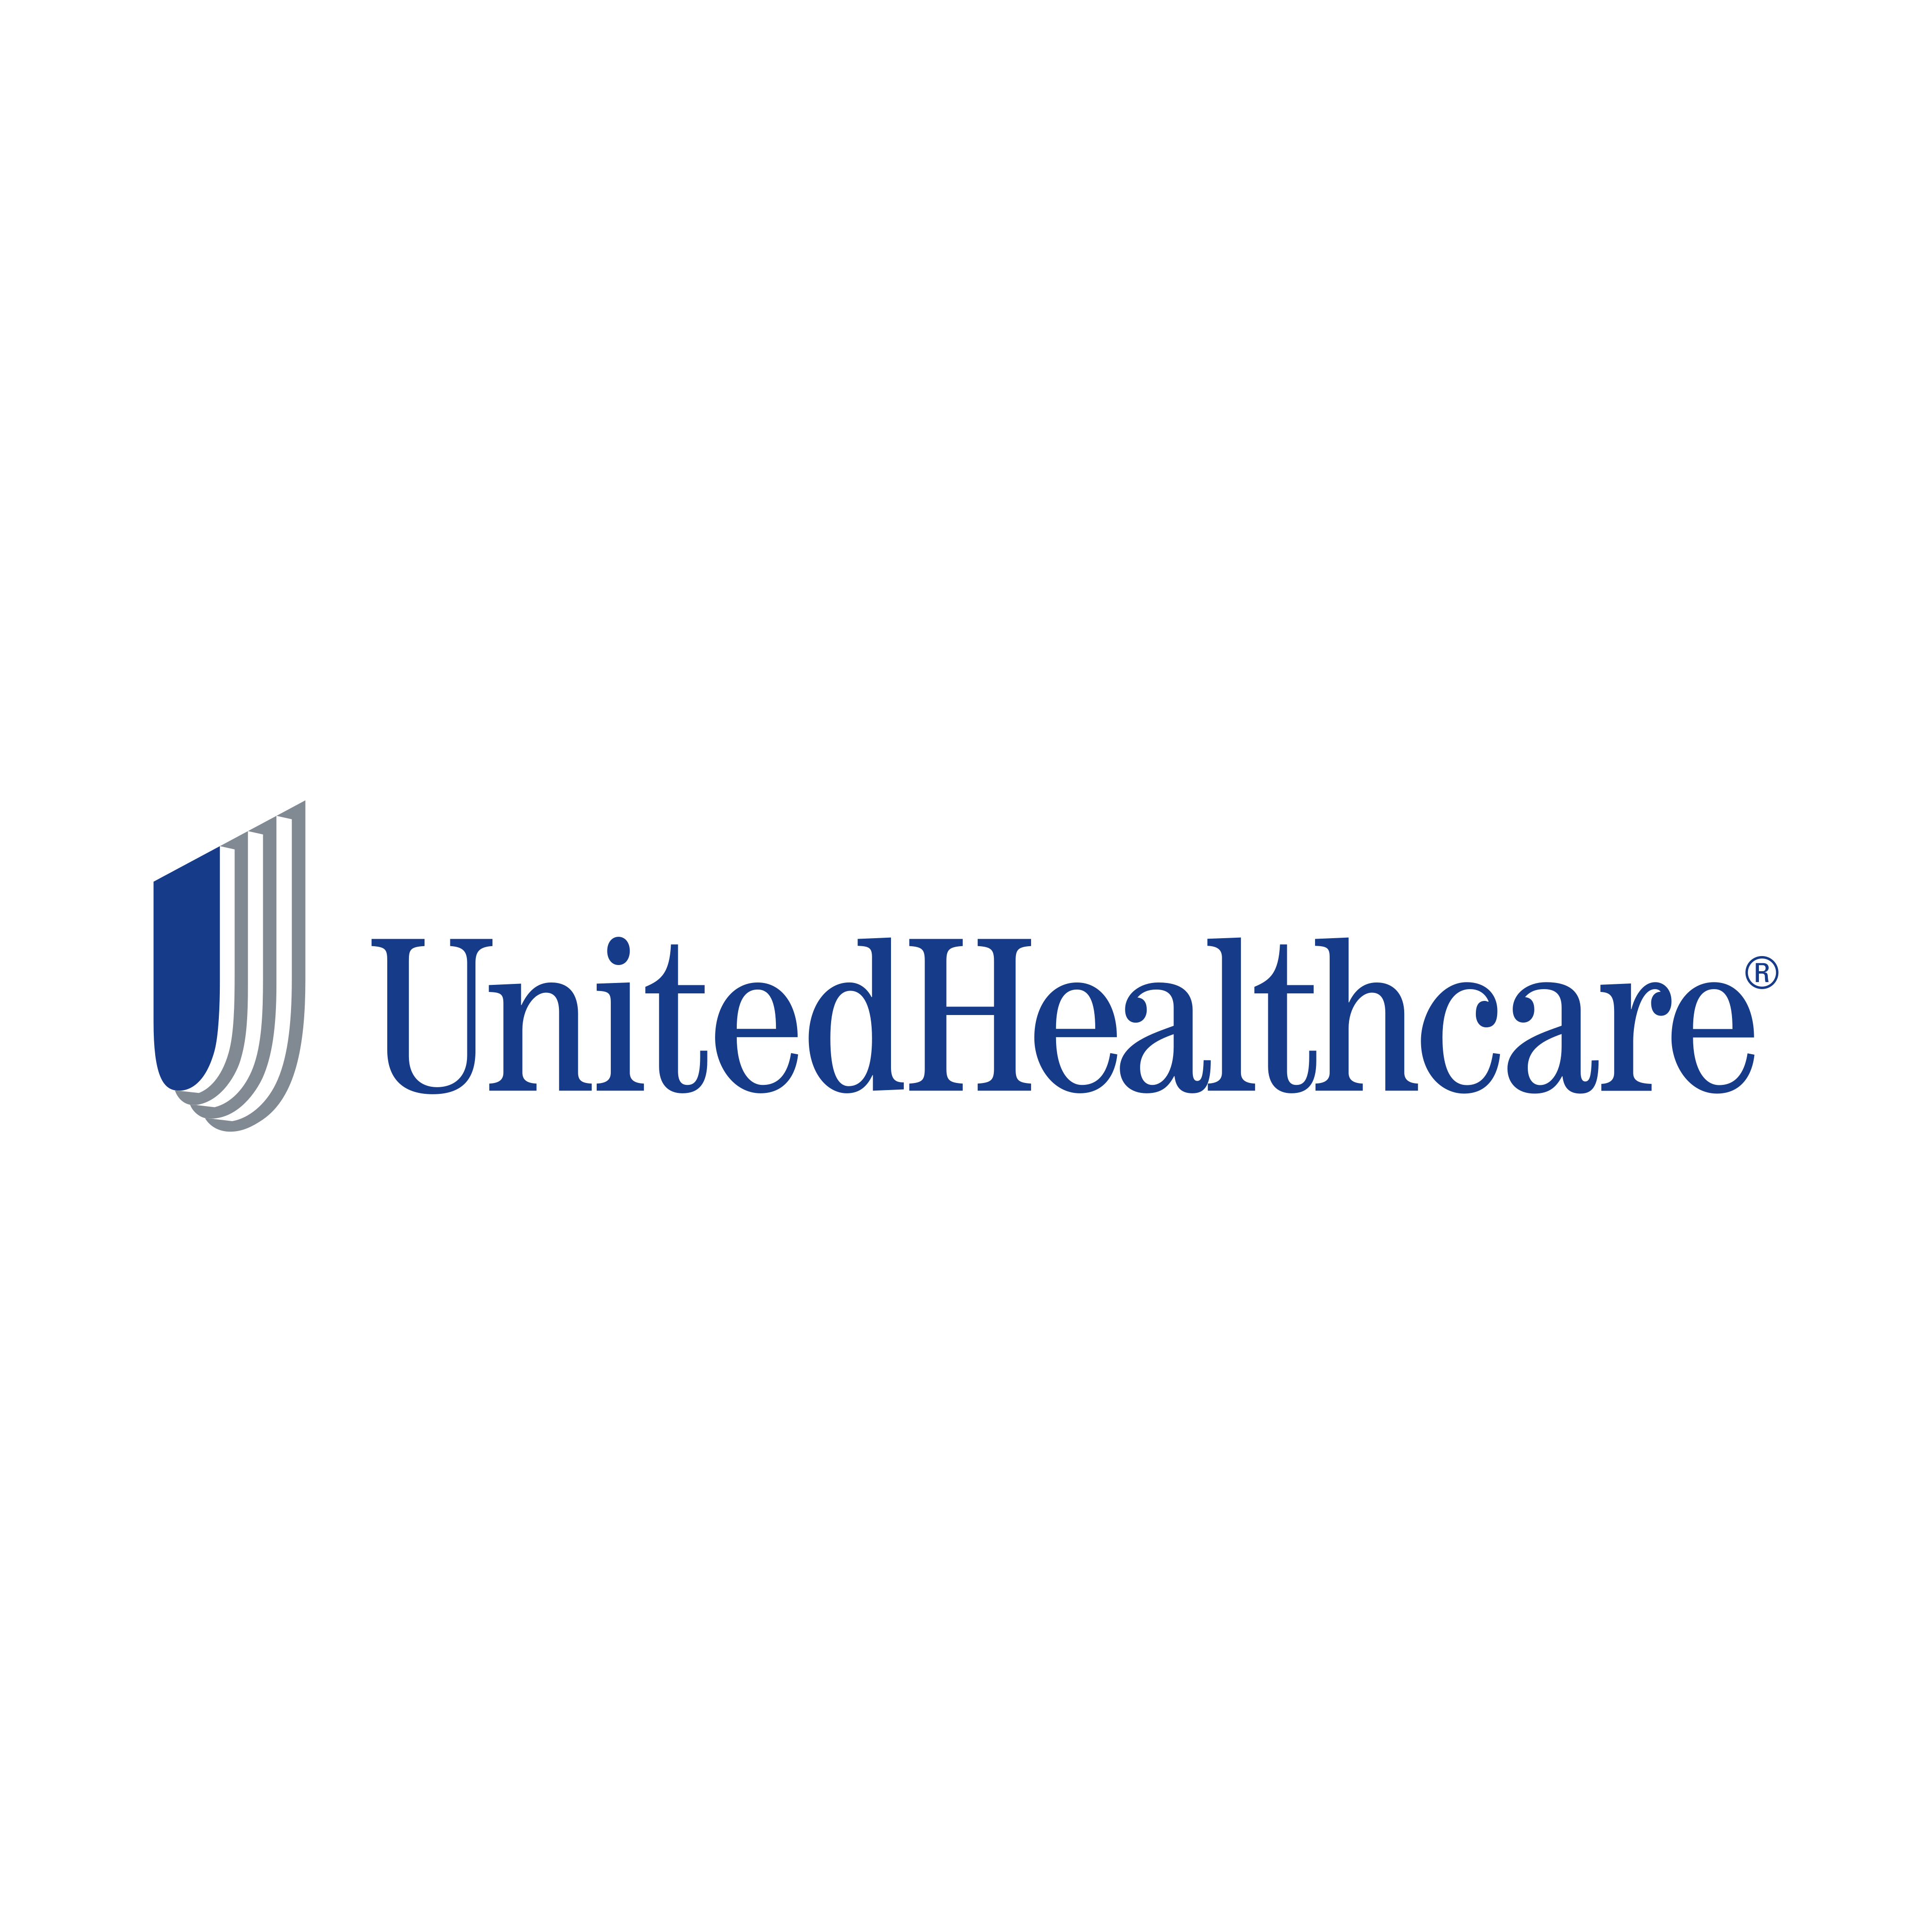 UnitedHealthcare Logo PNG.